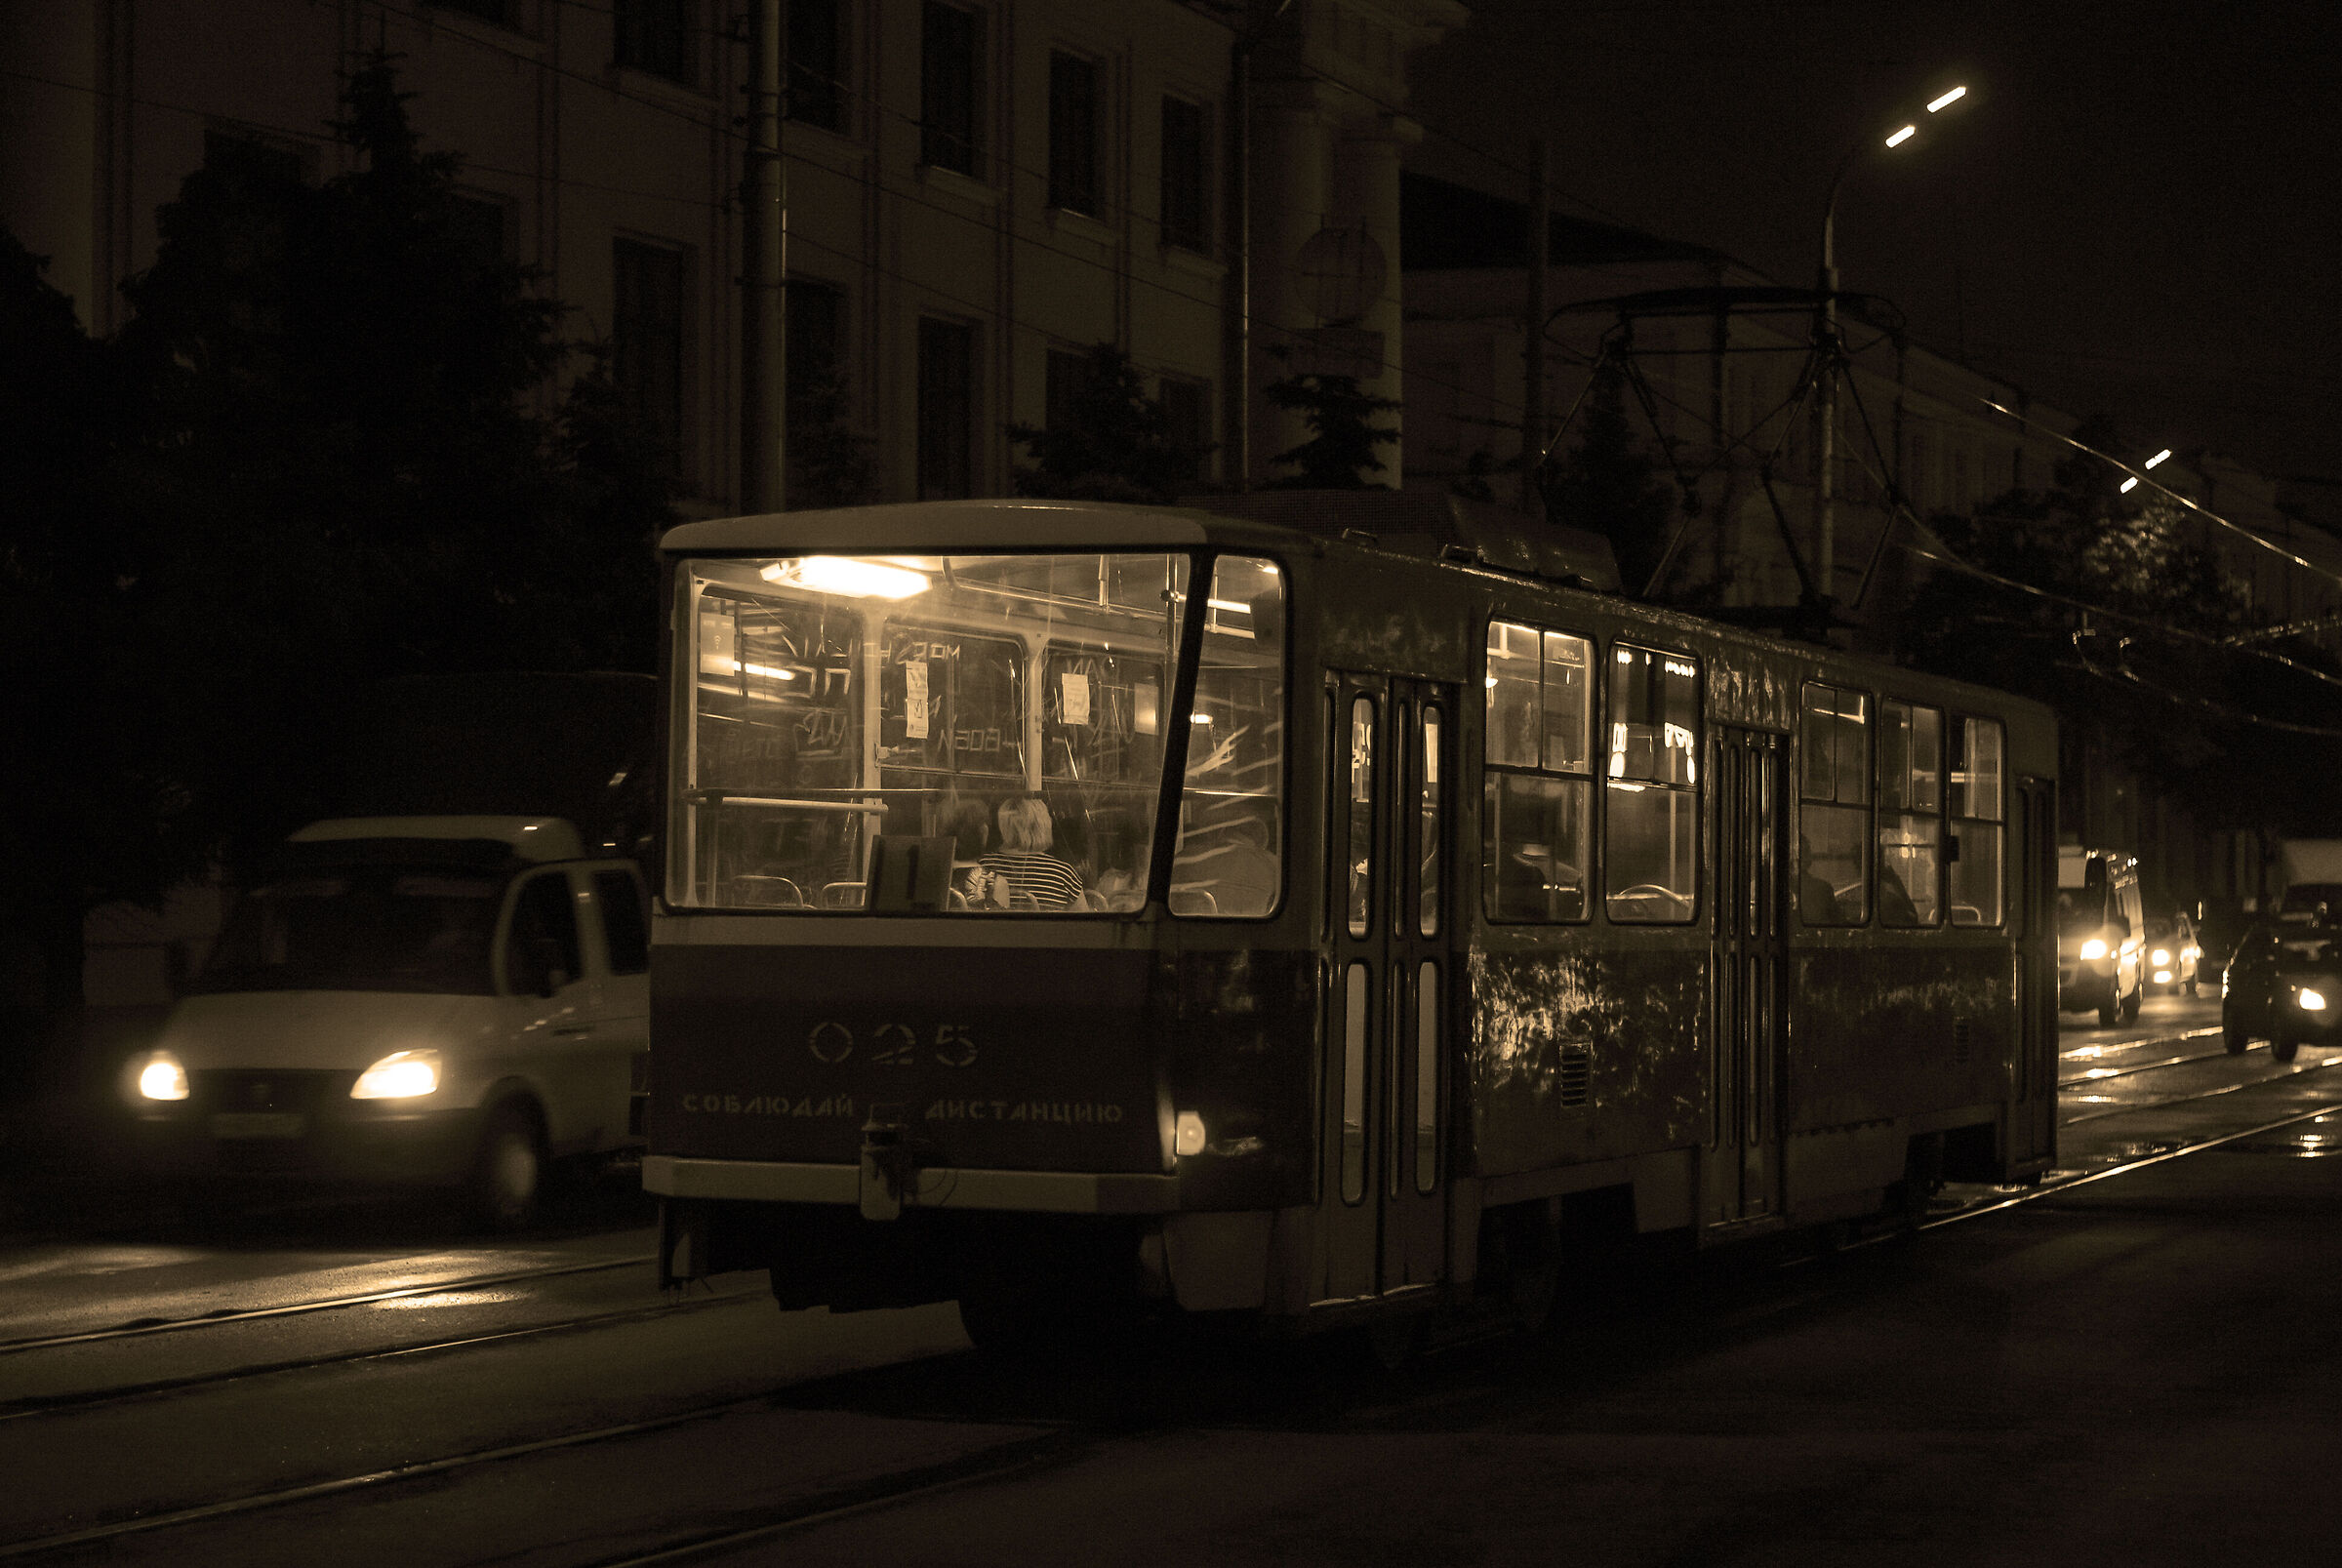 The night tram*...